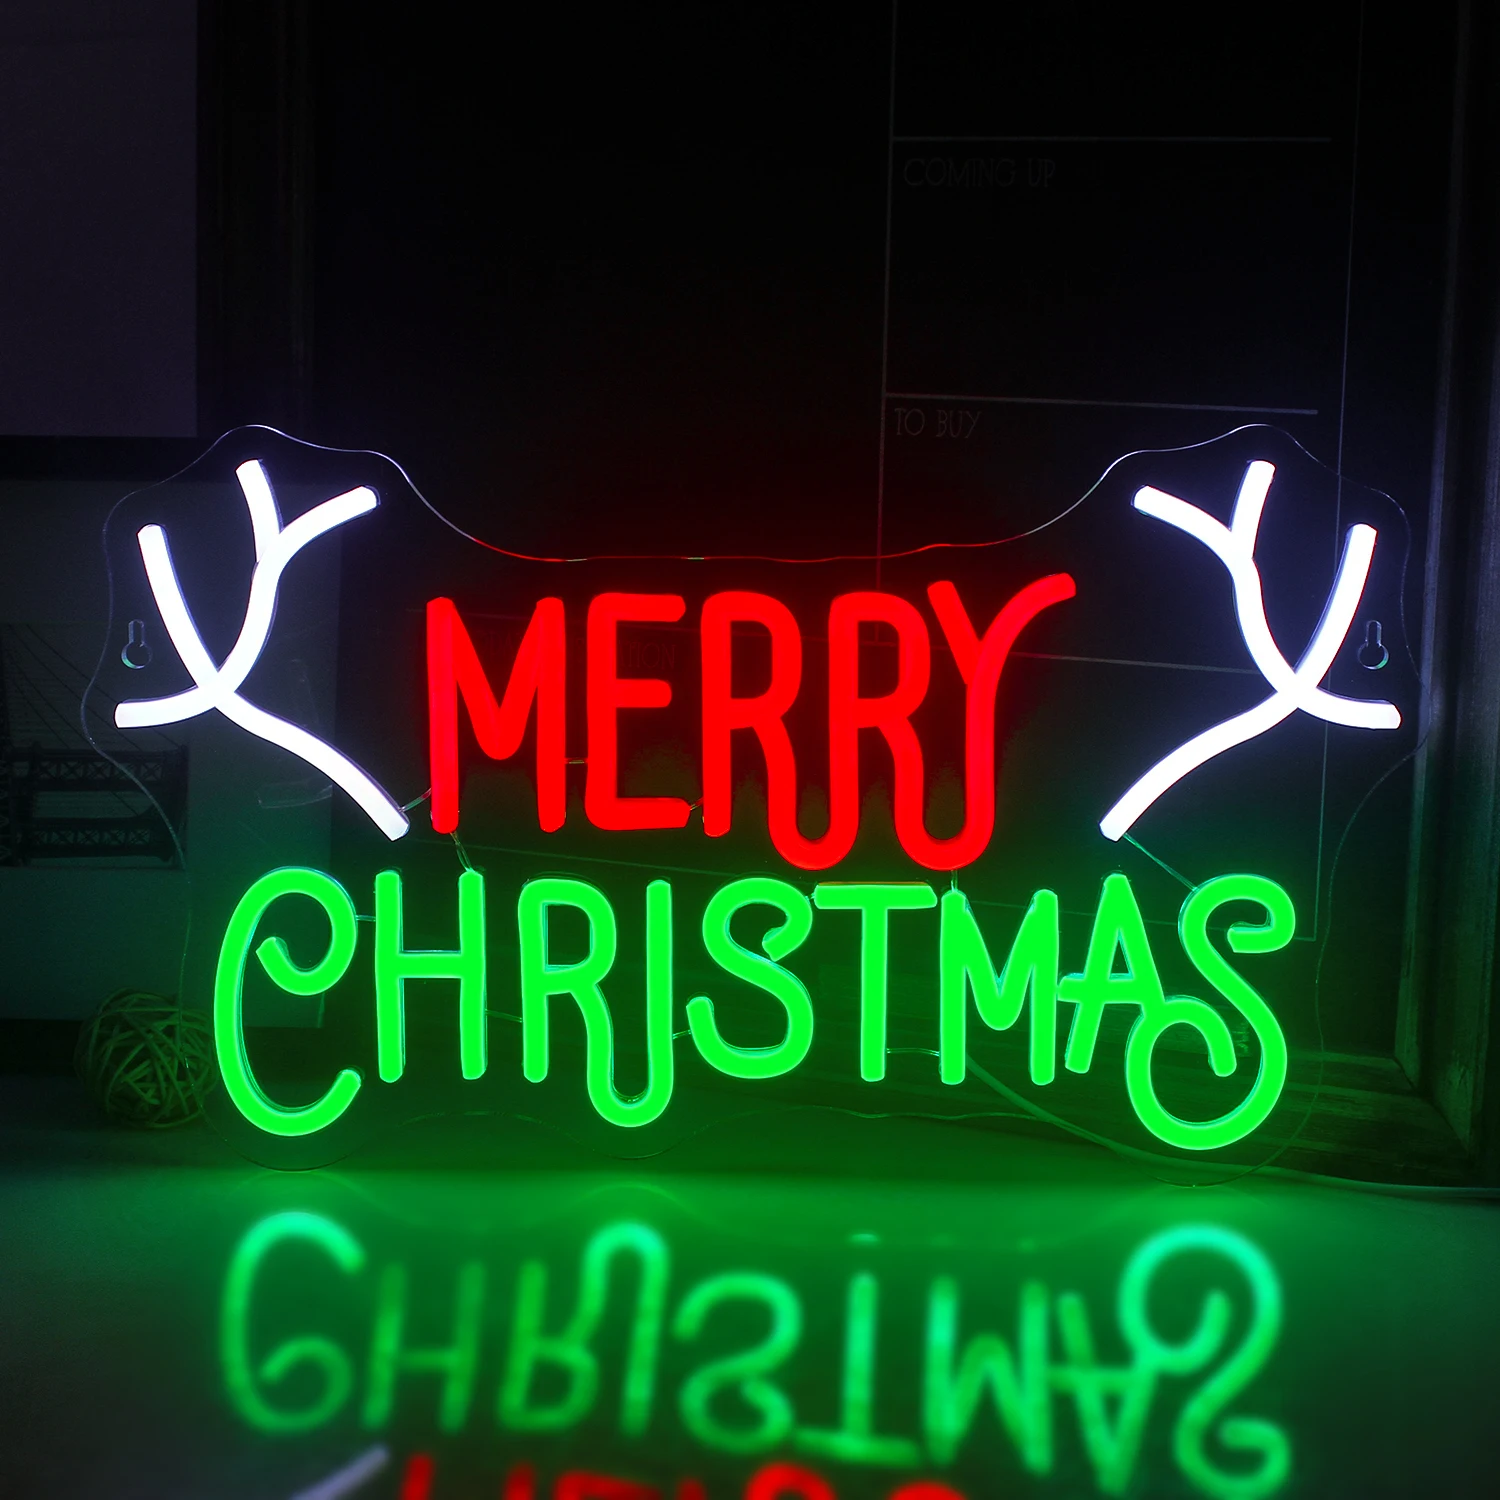 Merry Christmas Neon Sign Led Neon Wall Light Acrylic Board for Christmas Party Supplies Bedroom Wedding Bar Pub Club Christmas